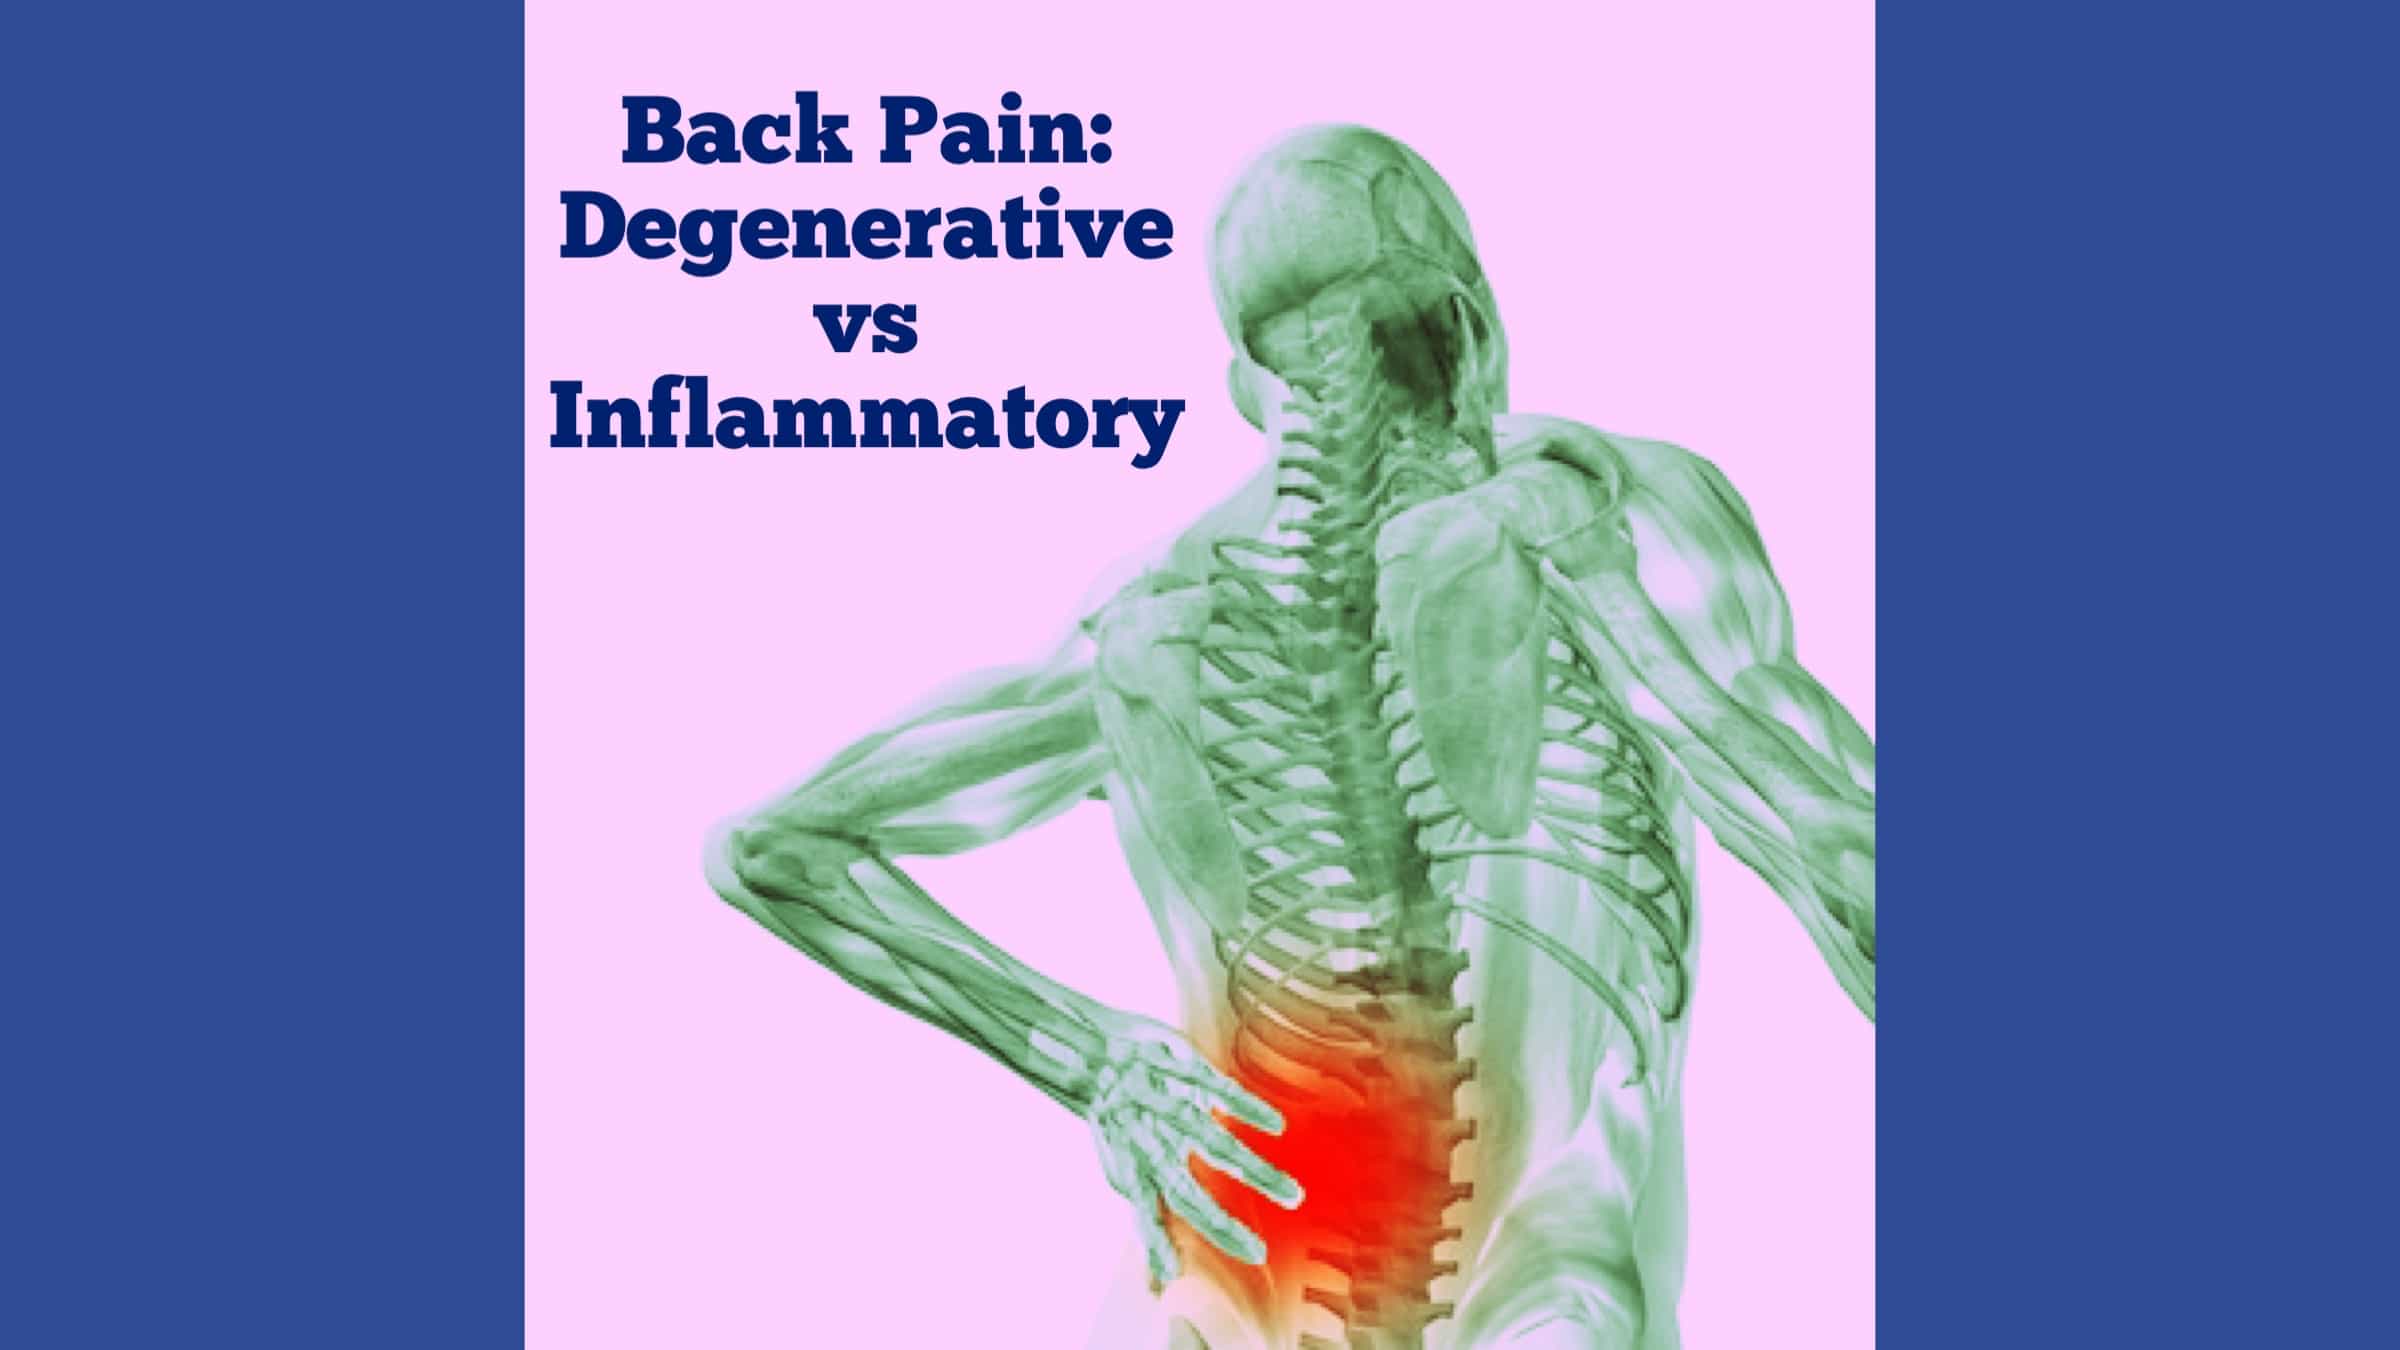 Back Pain- Inflammatory versus Degenerative